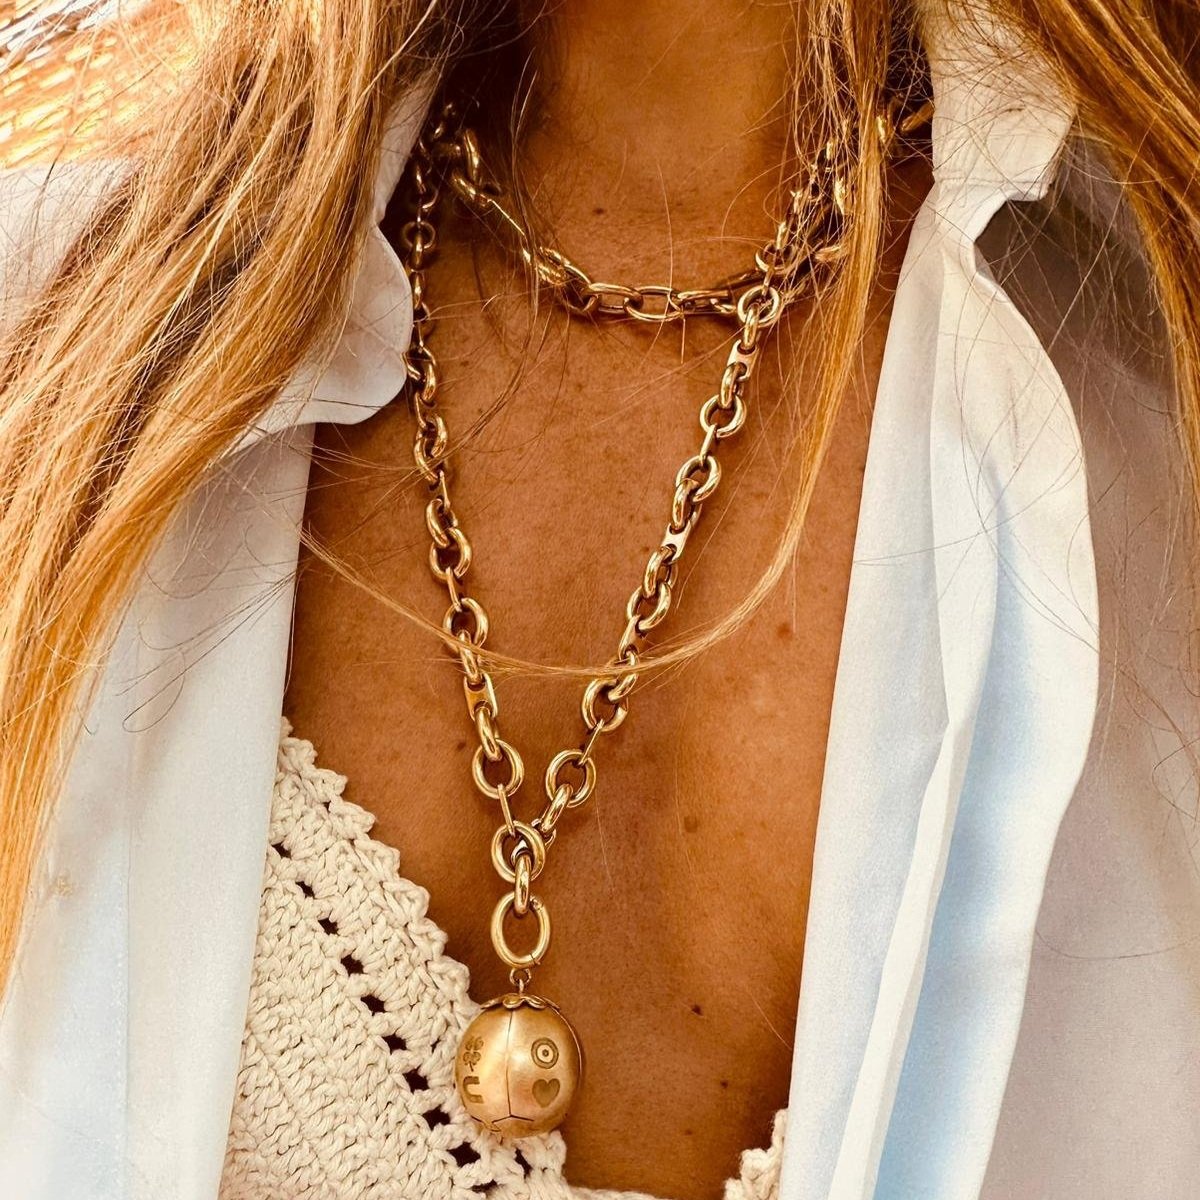 Lauren Rubinski jewelry